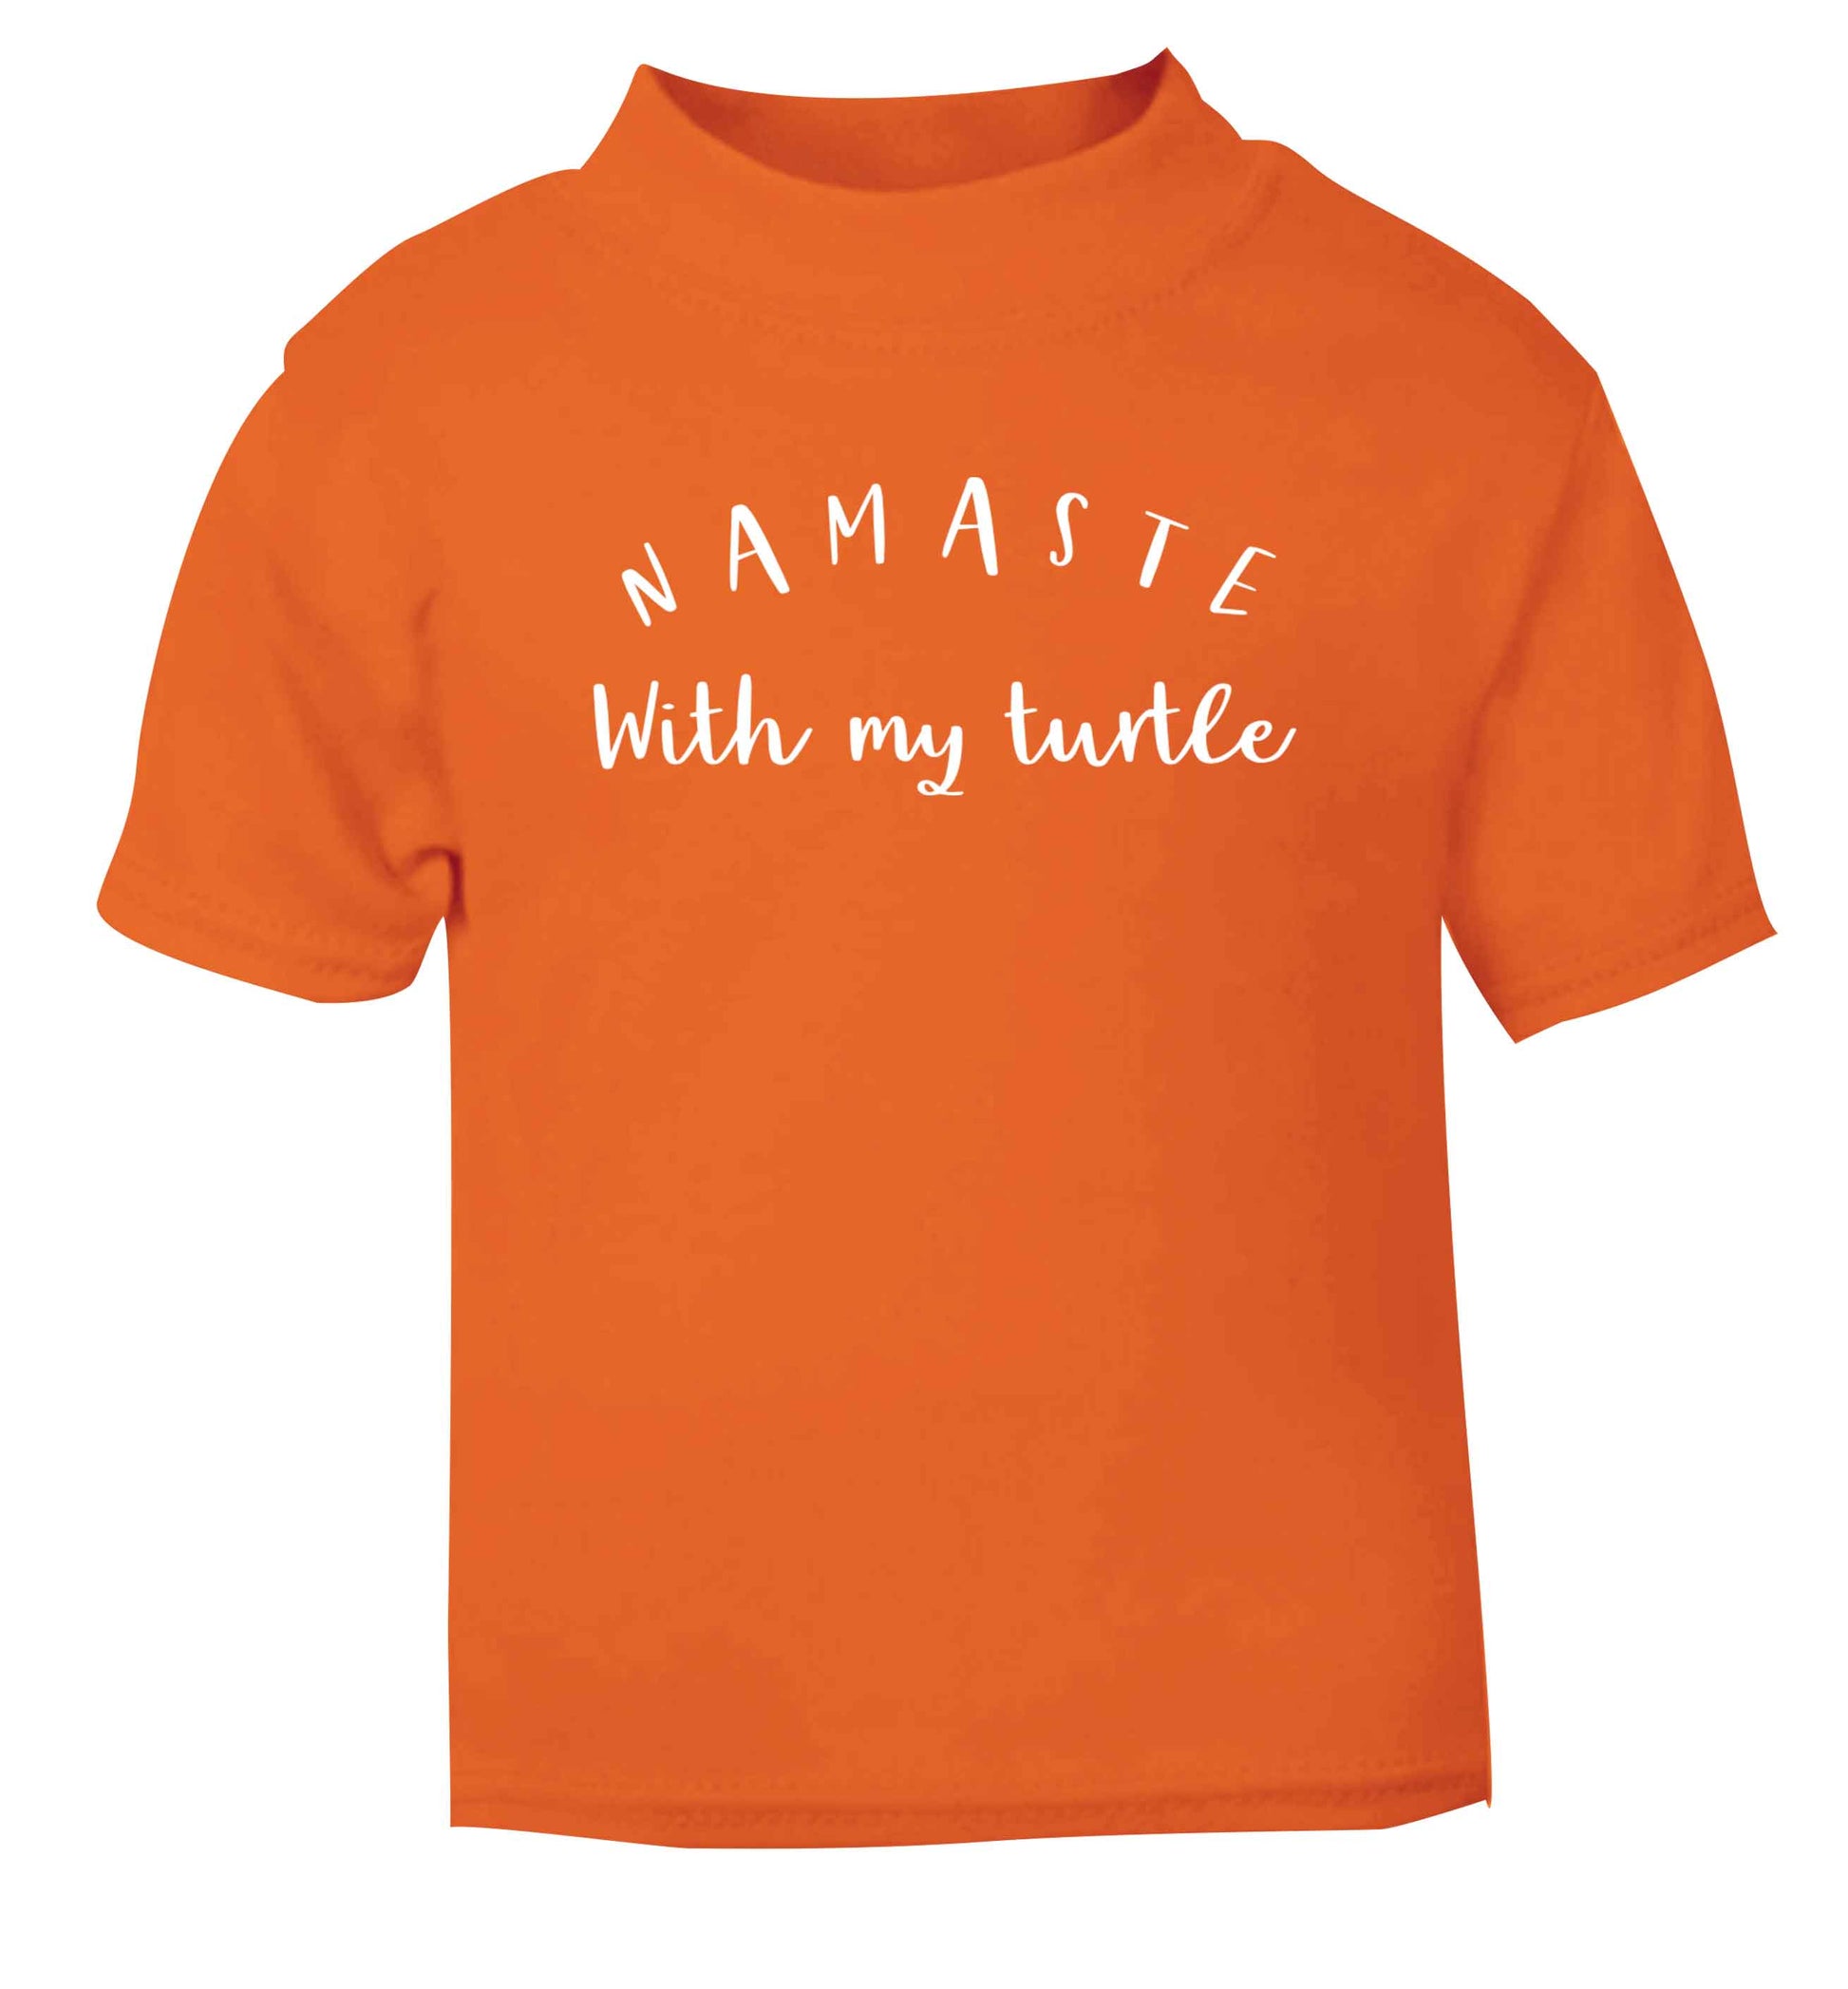 Namaste with my turtle orange Baby Toddler Tshirt 2 Years